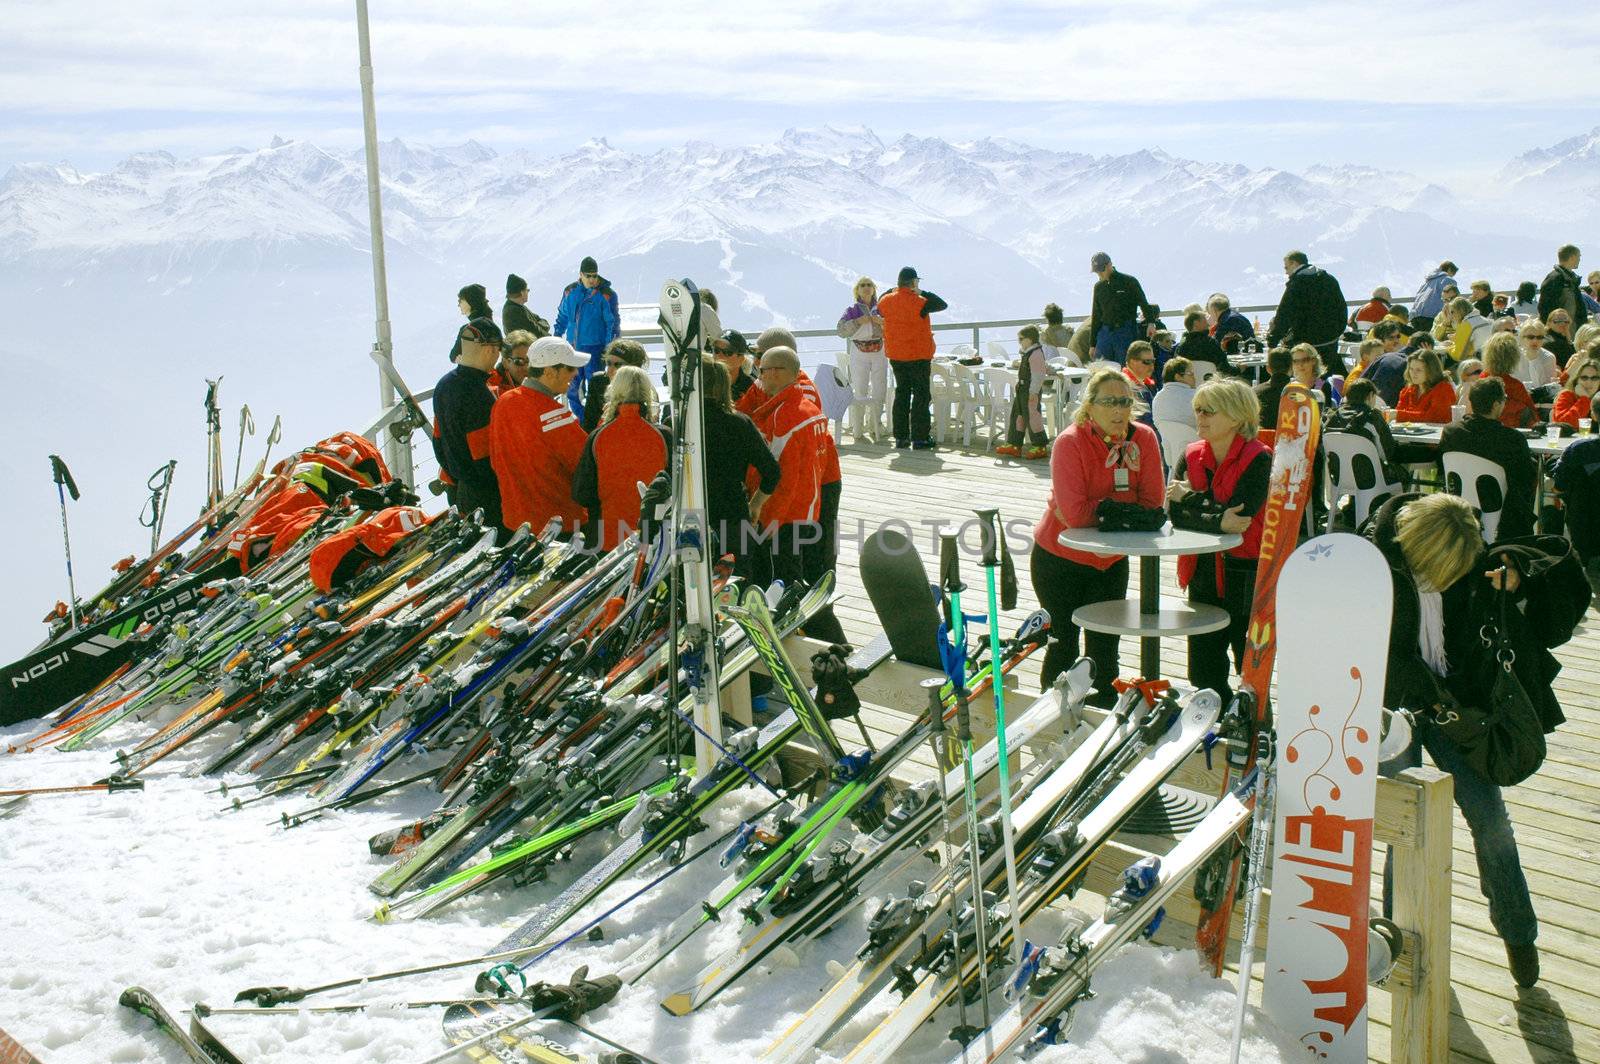 Montain ski resort near Sion, Swetzeland - March 2007. Mountain skiers prepare for descent.